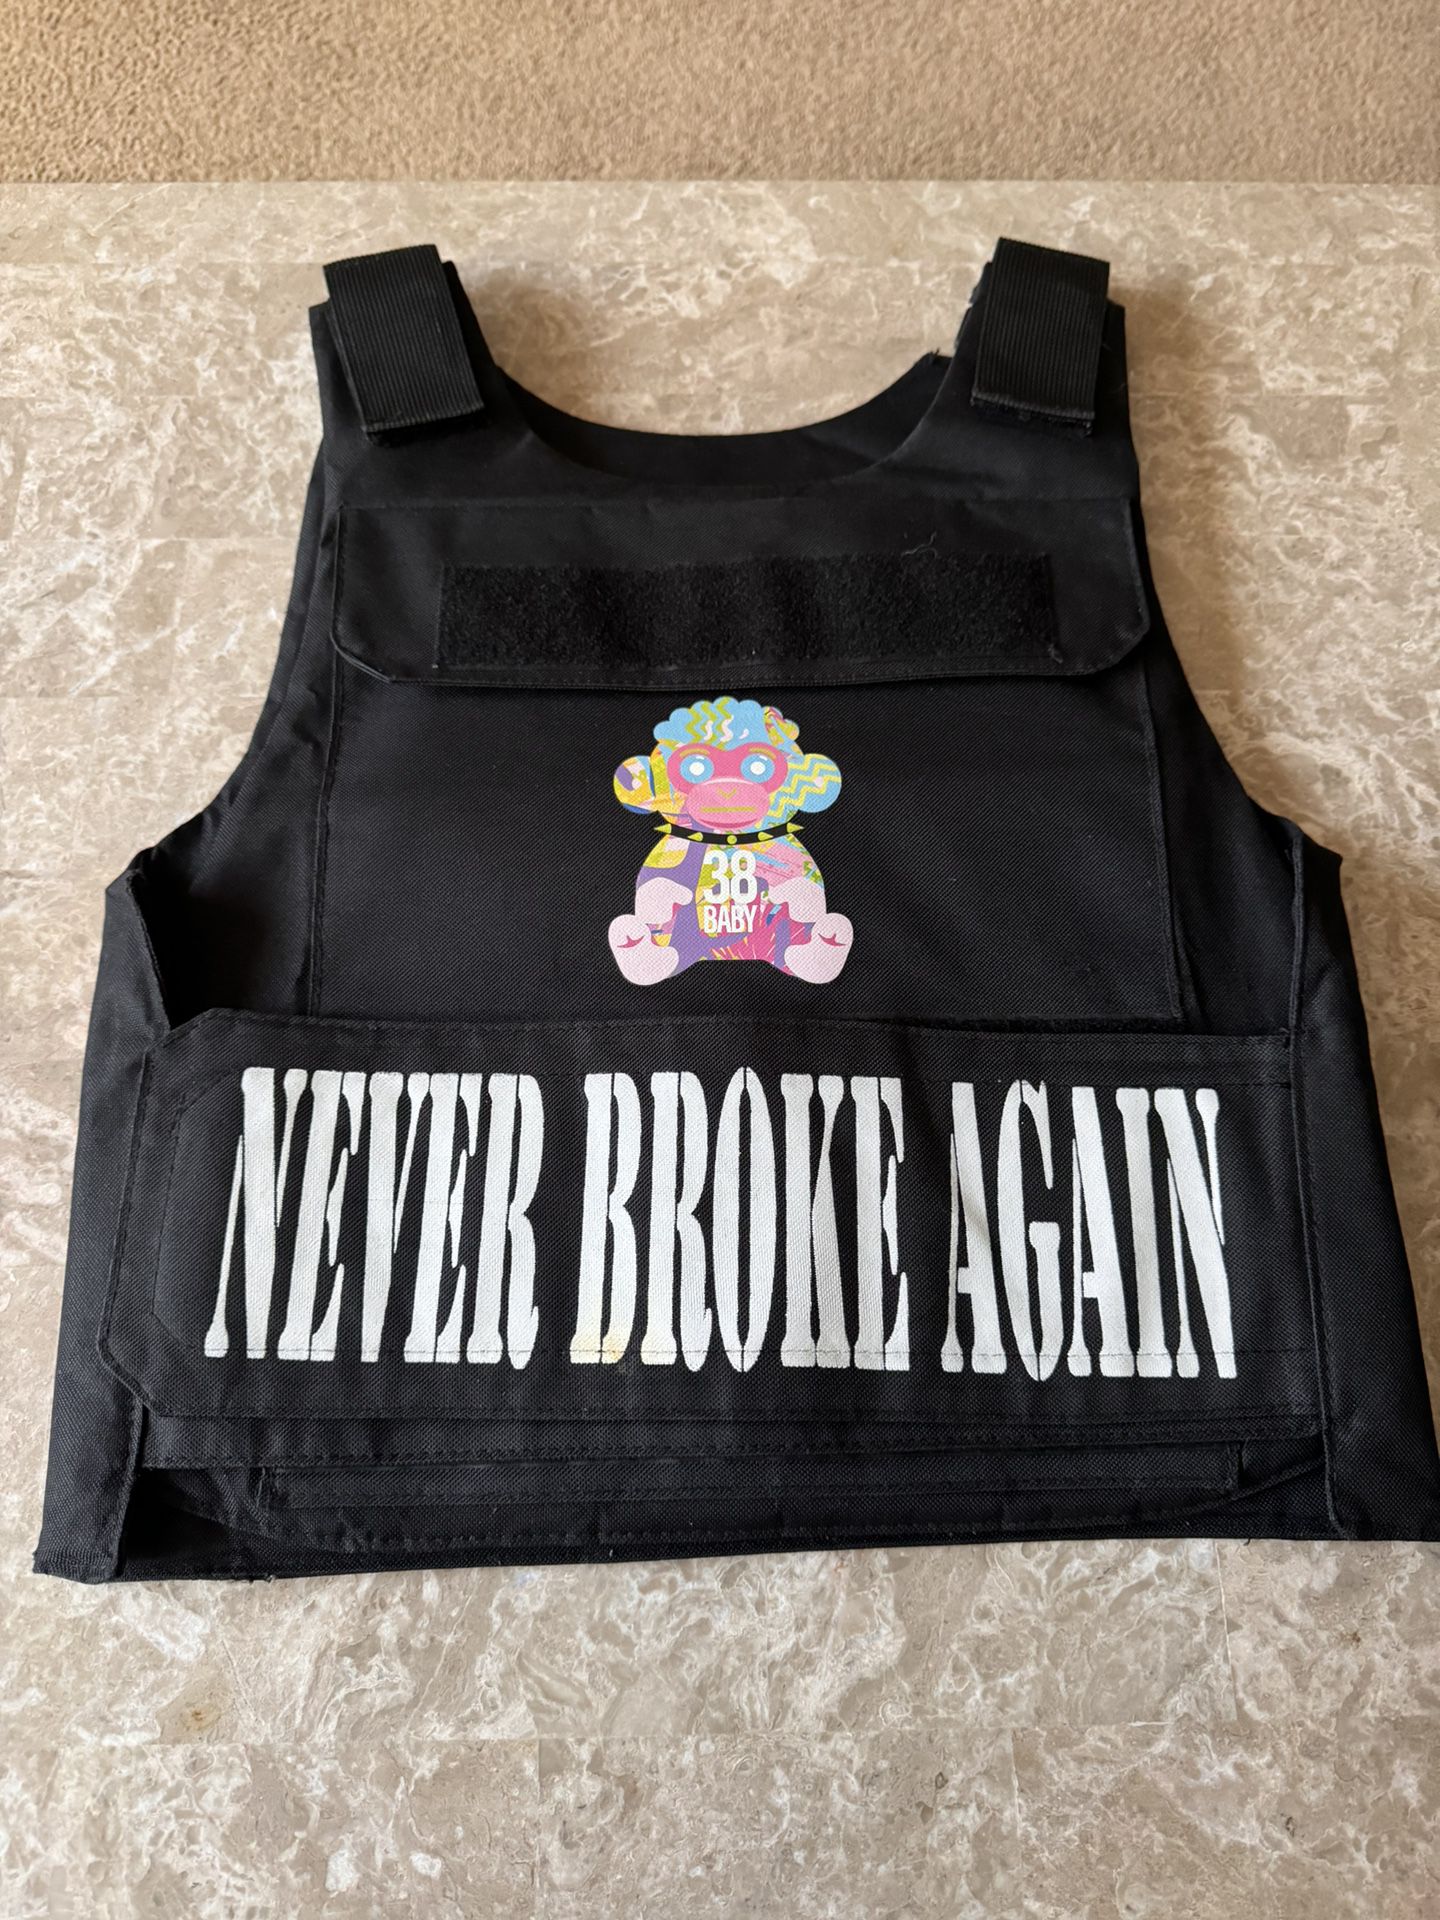 Never Broke Again Bullet Proof Vest (Without Plates)